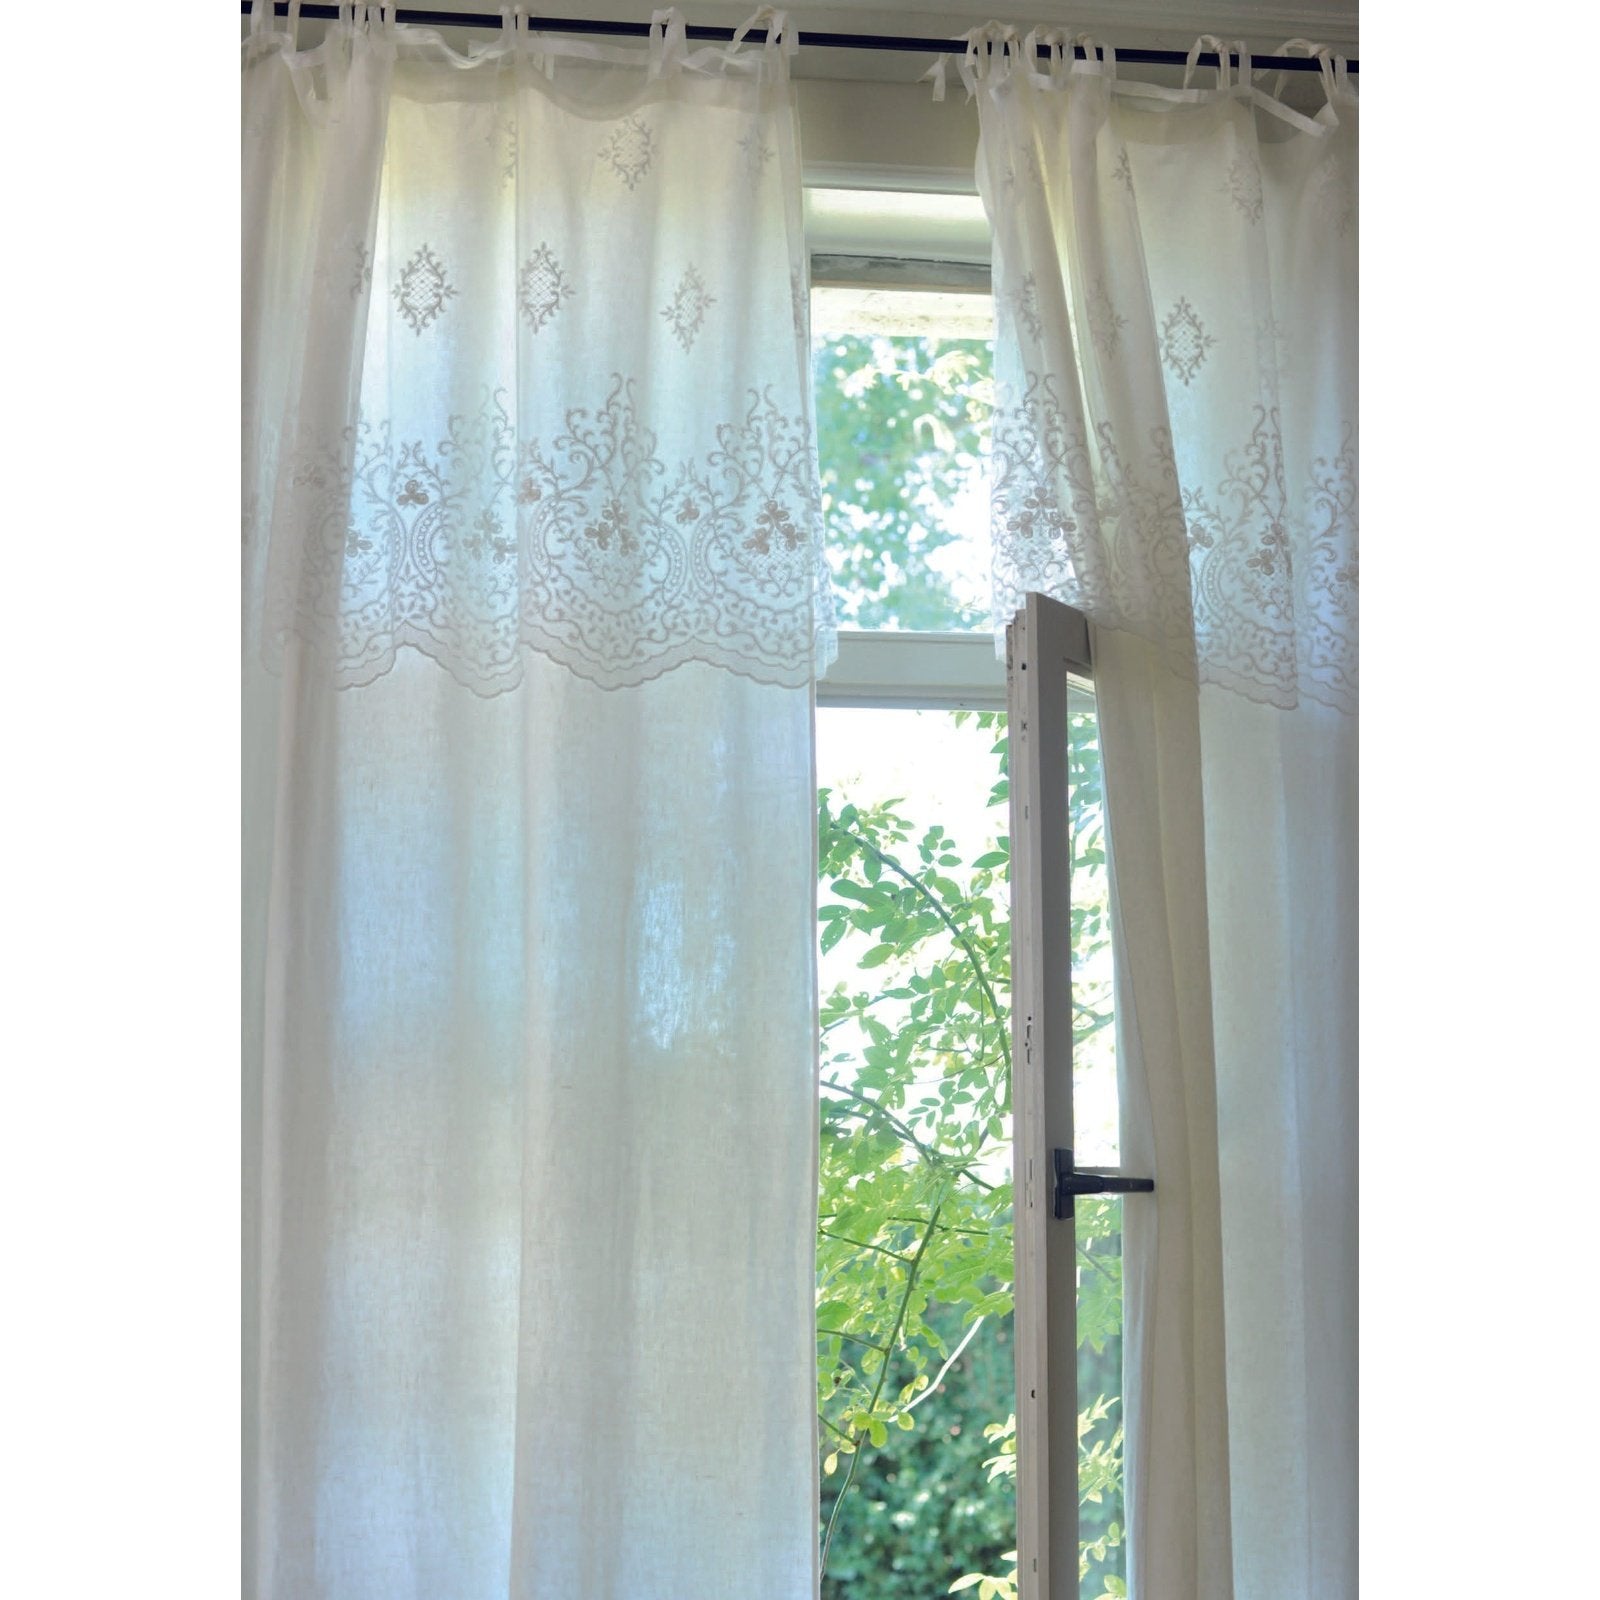 Luxurious window treatment - Audrey lace curtain.